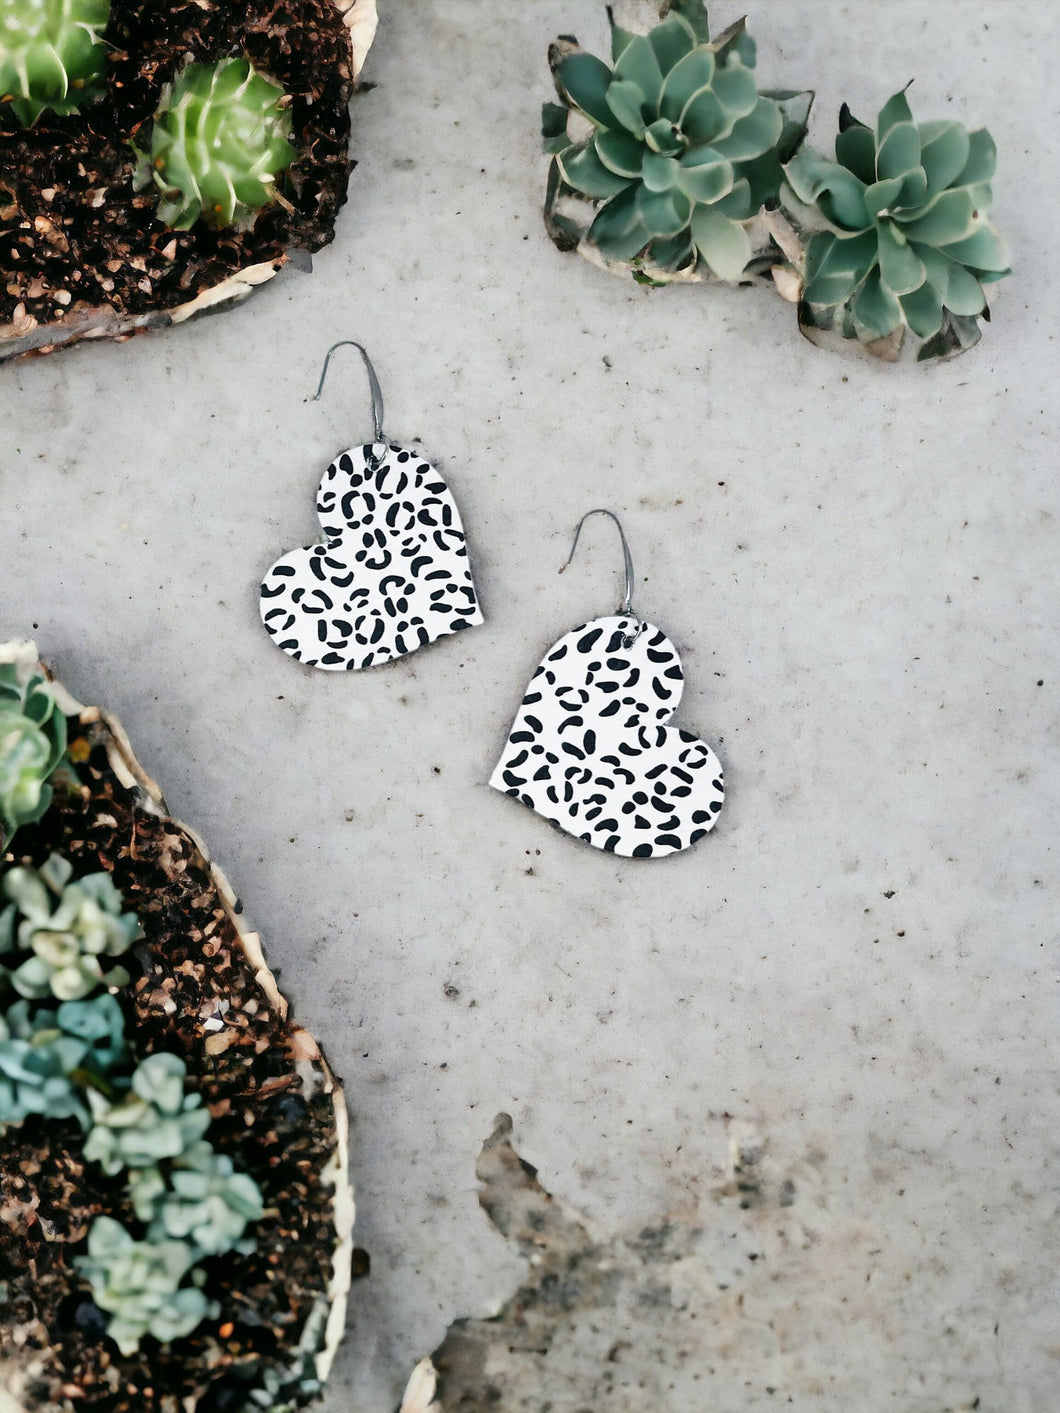 White Spotted Leopard Leather Heart Earrings - E19-1625